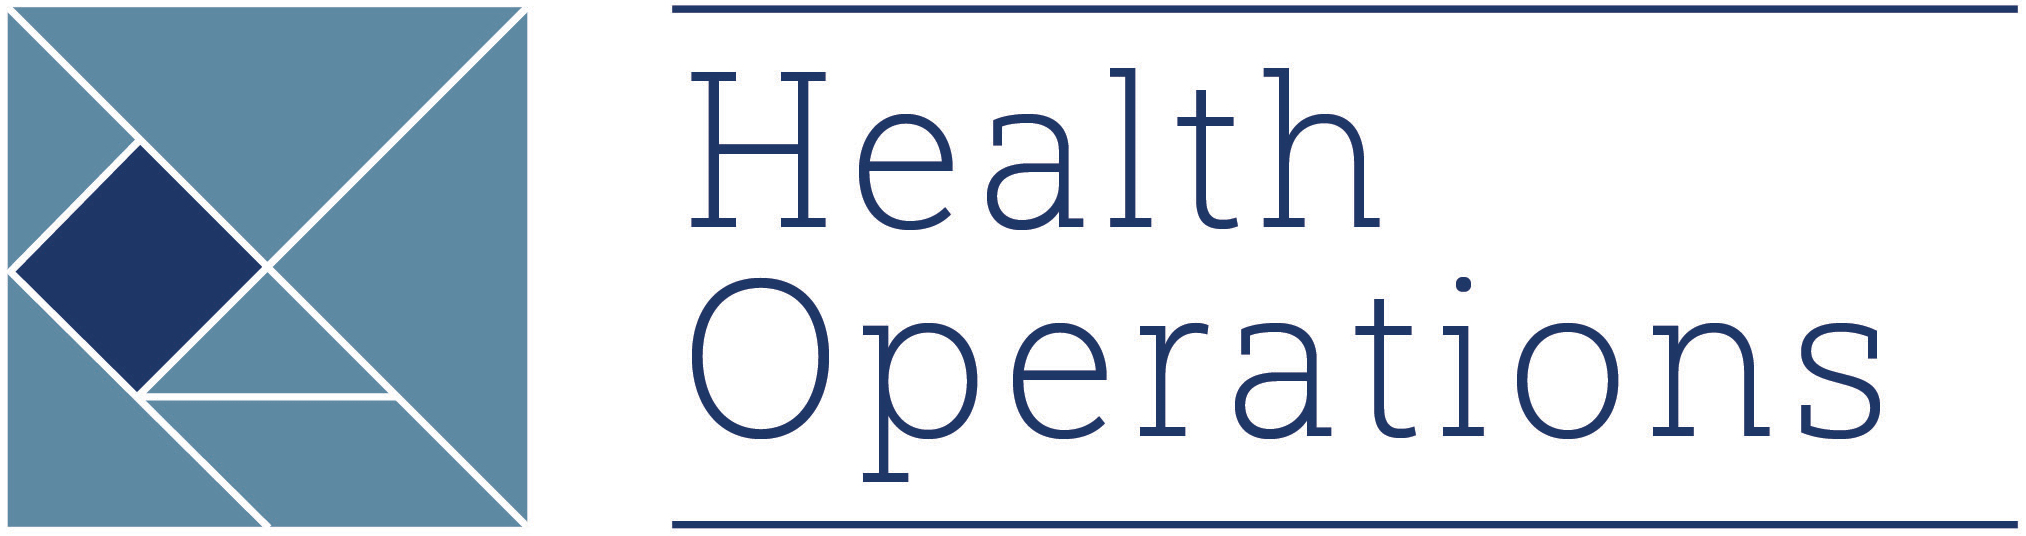 Health Operations